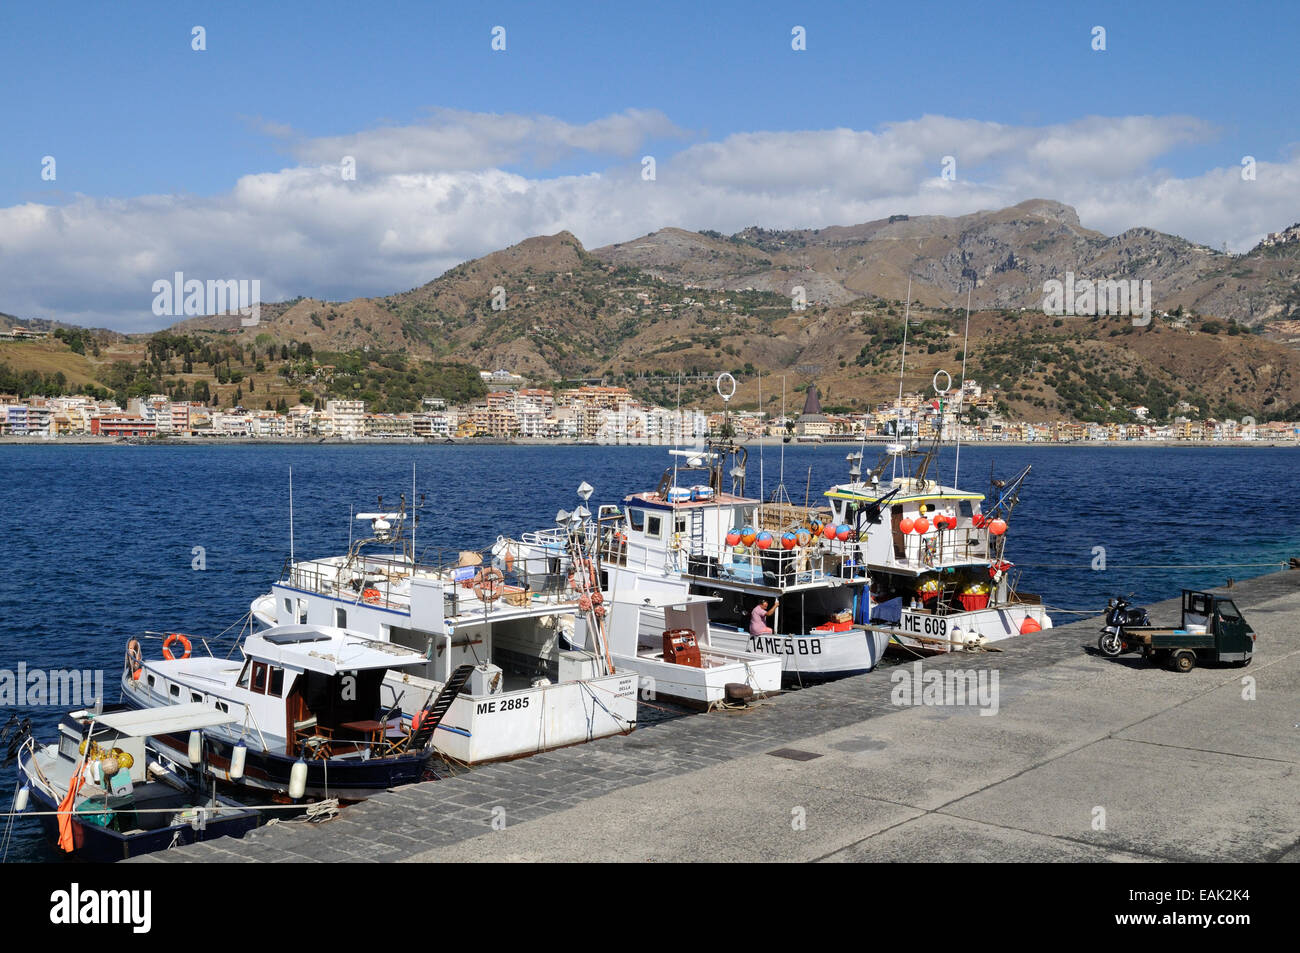 Angelboote/Fischerboote in Giardini Naxos Hafen Sizilien Italien Stockfoto